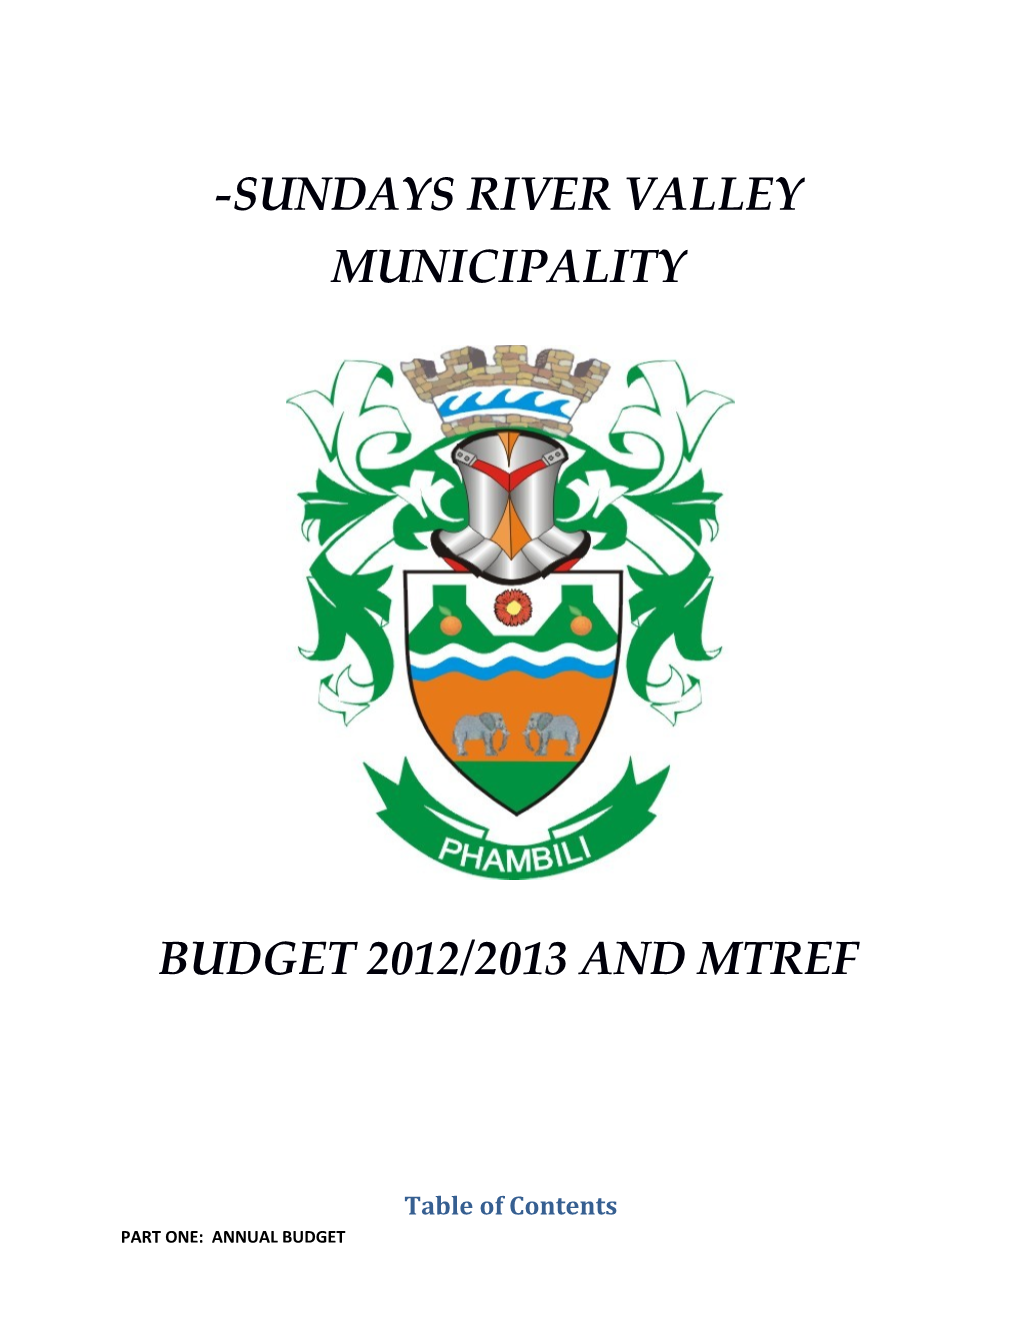 Sundays River Valley Municipality